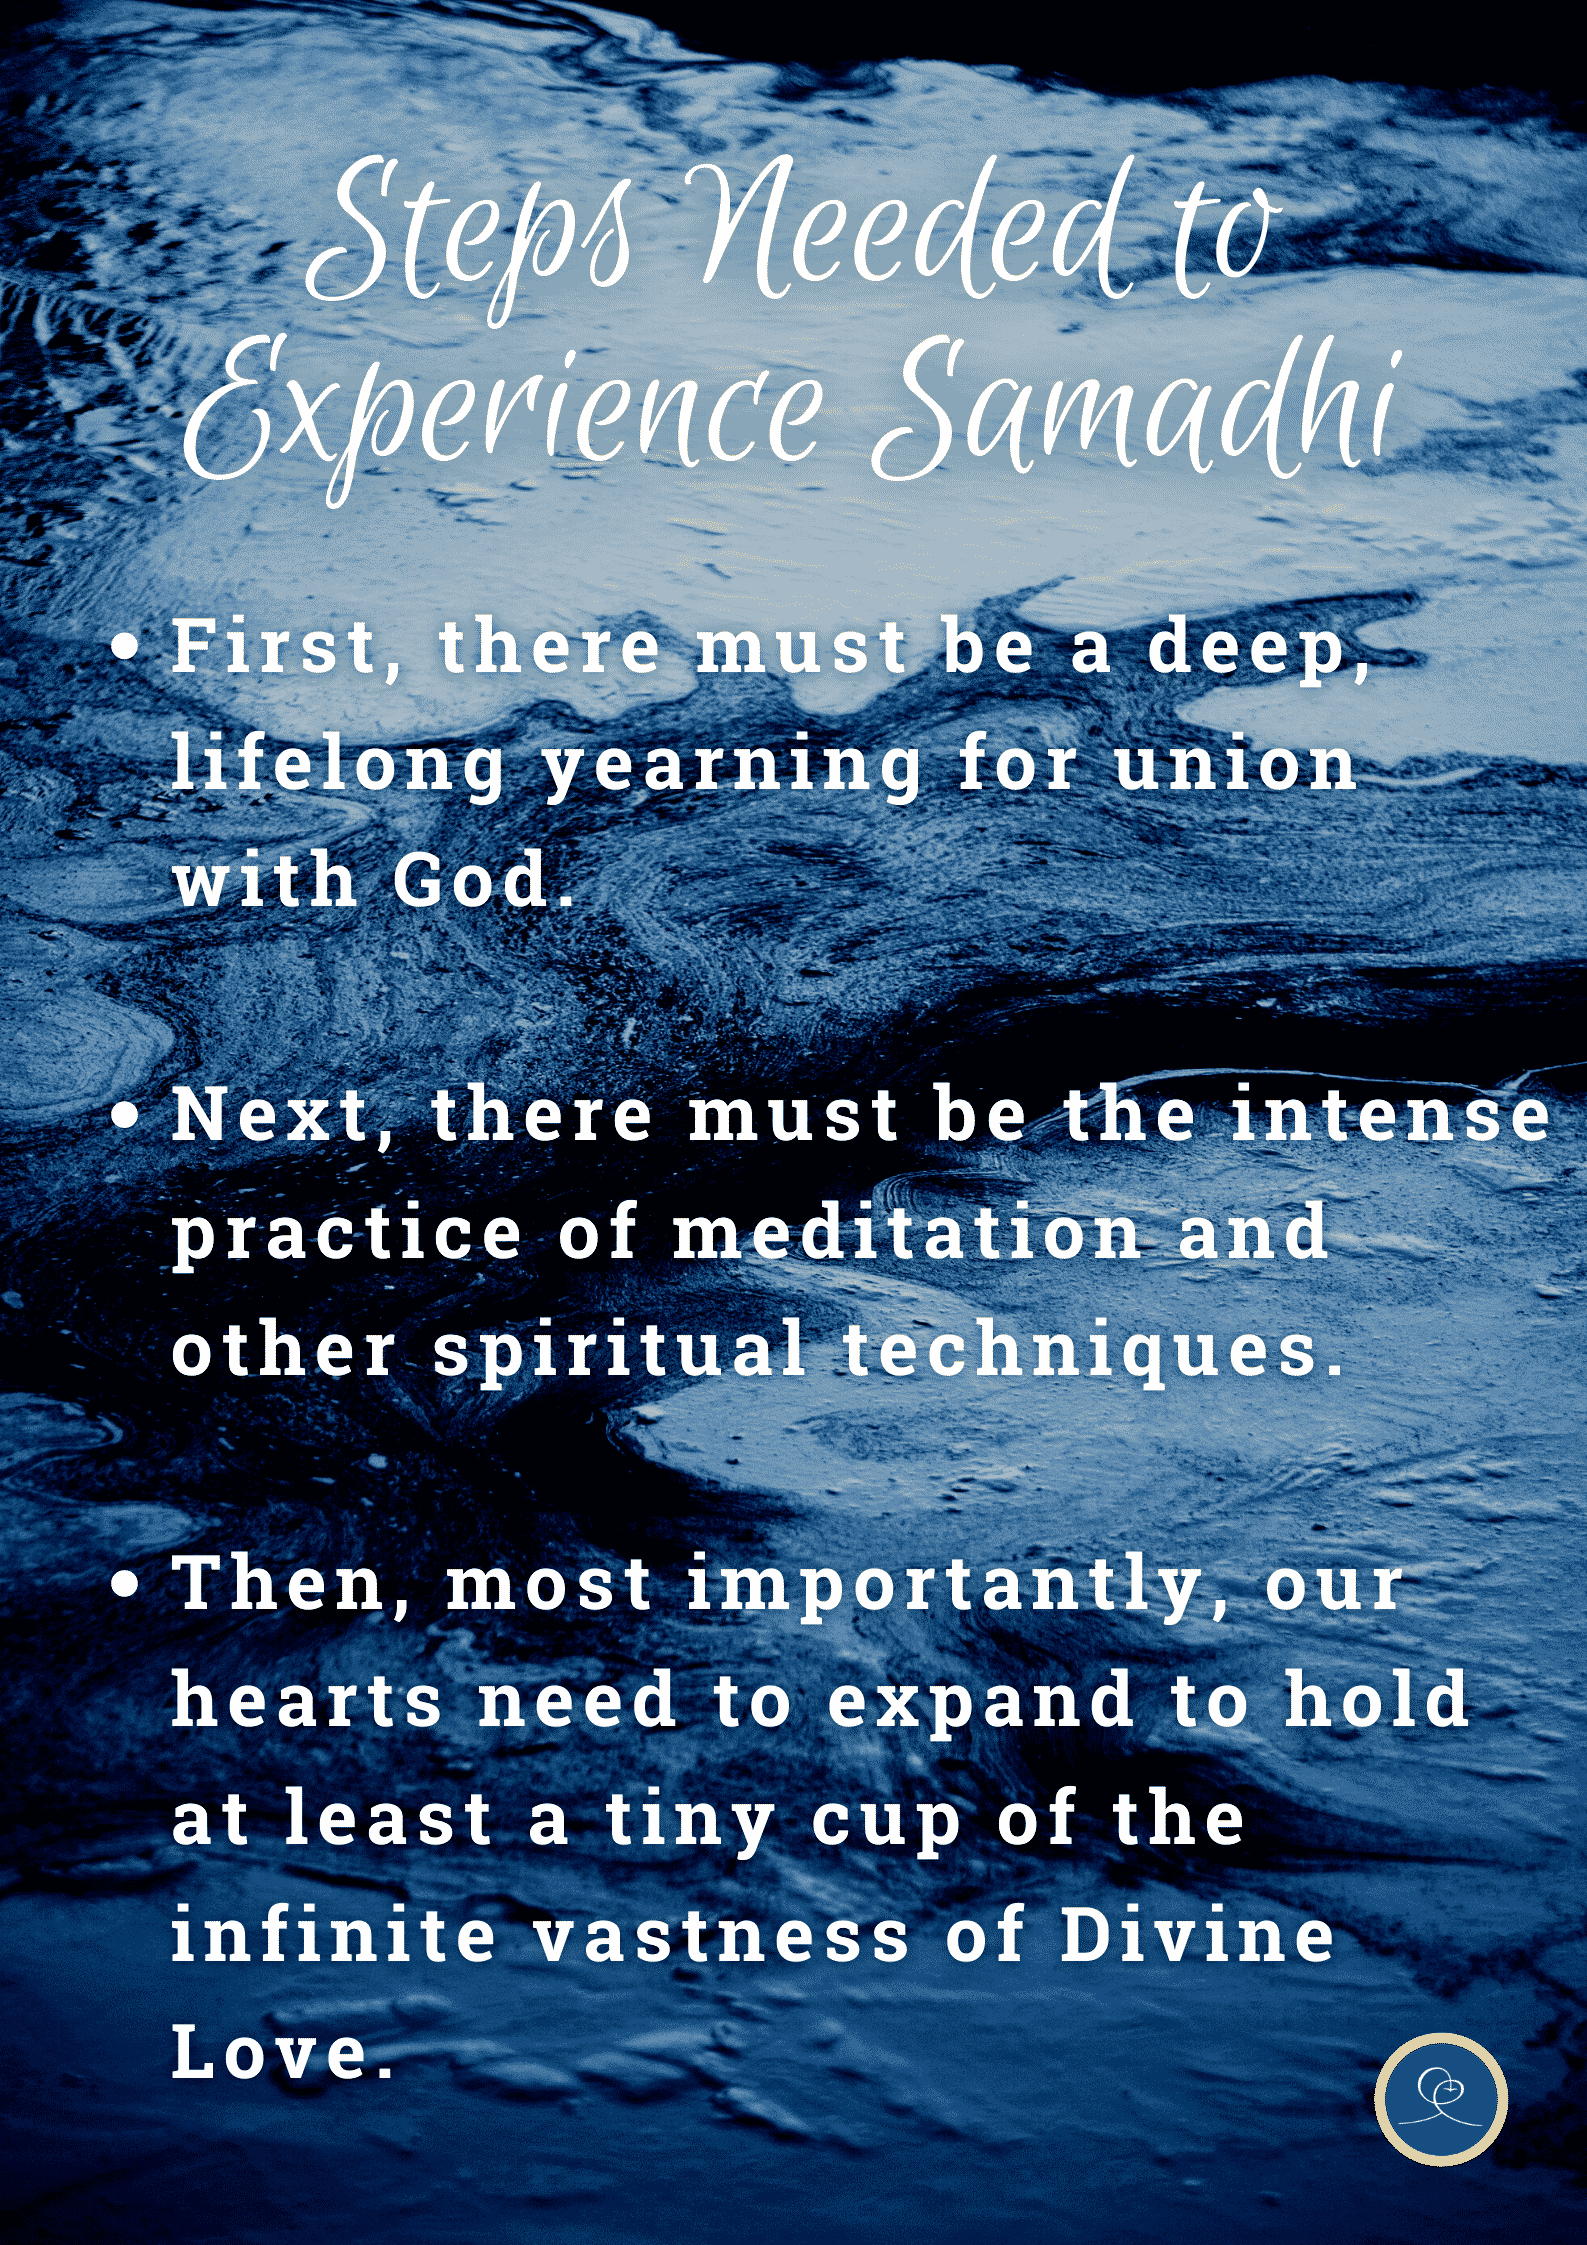 steps to experience samadhi based on teachings of yogananda of self realization